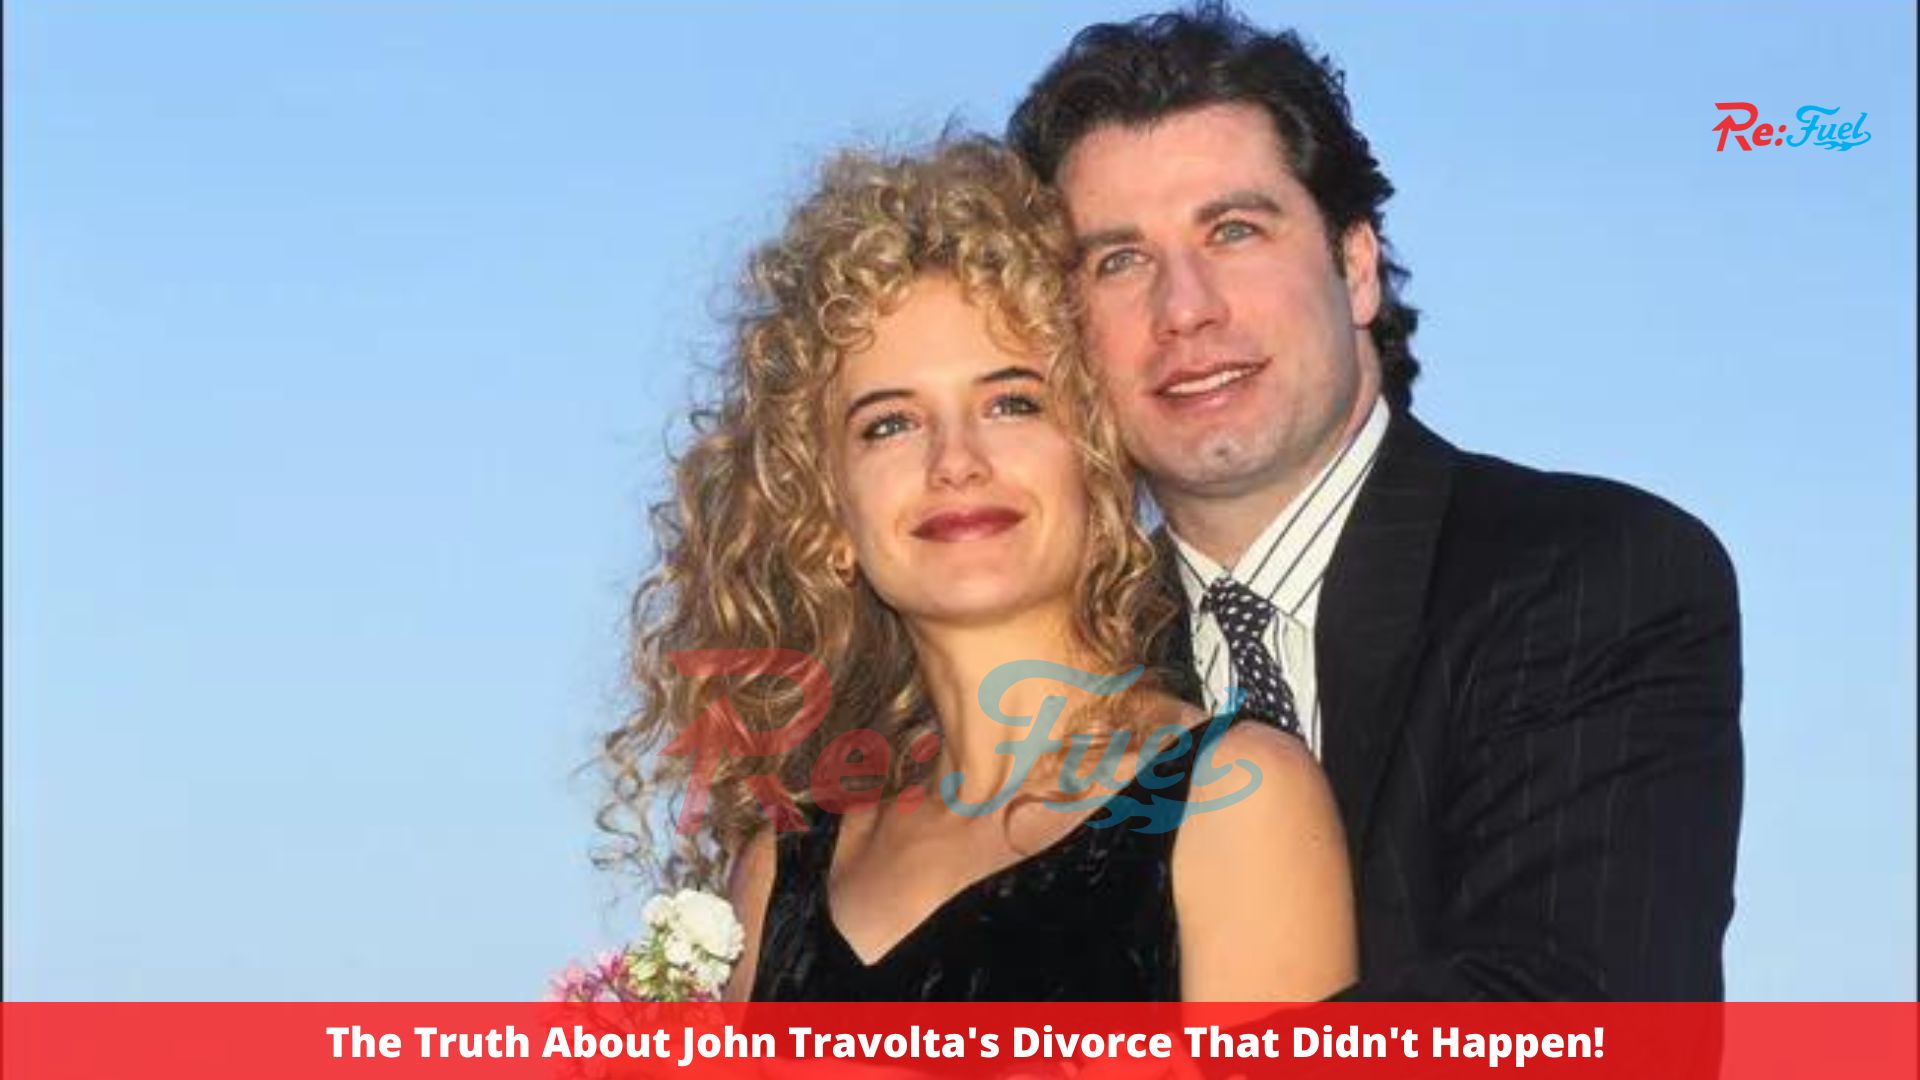 The Truth About John Travolta's Divorce That Didn't Happen!